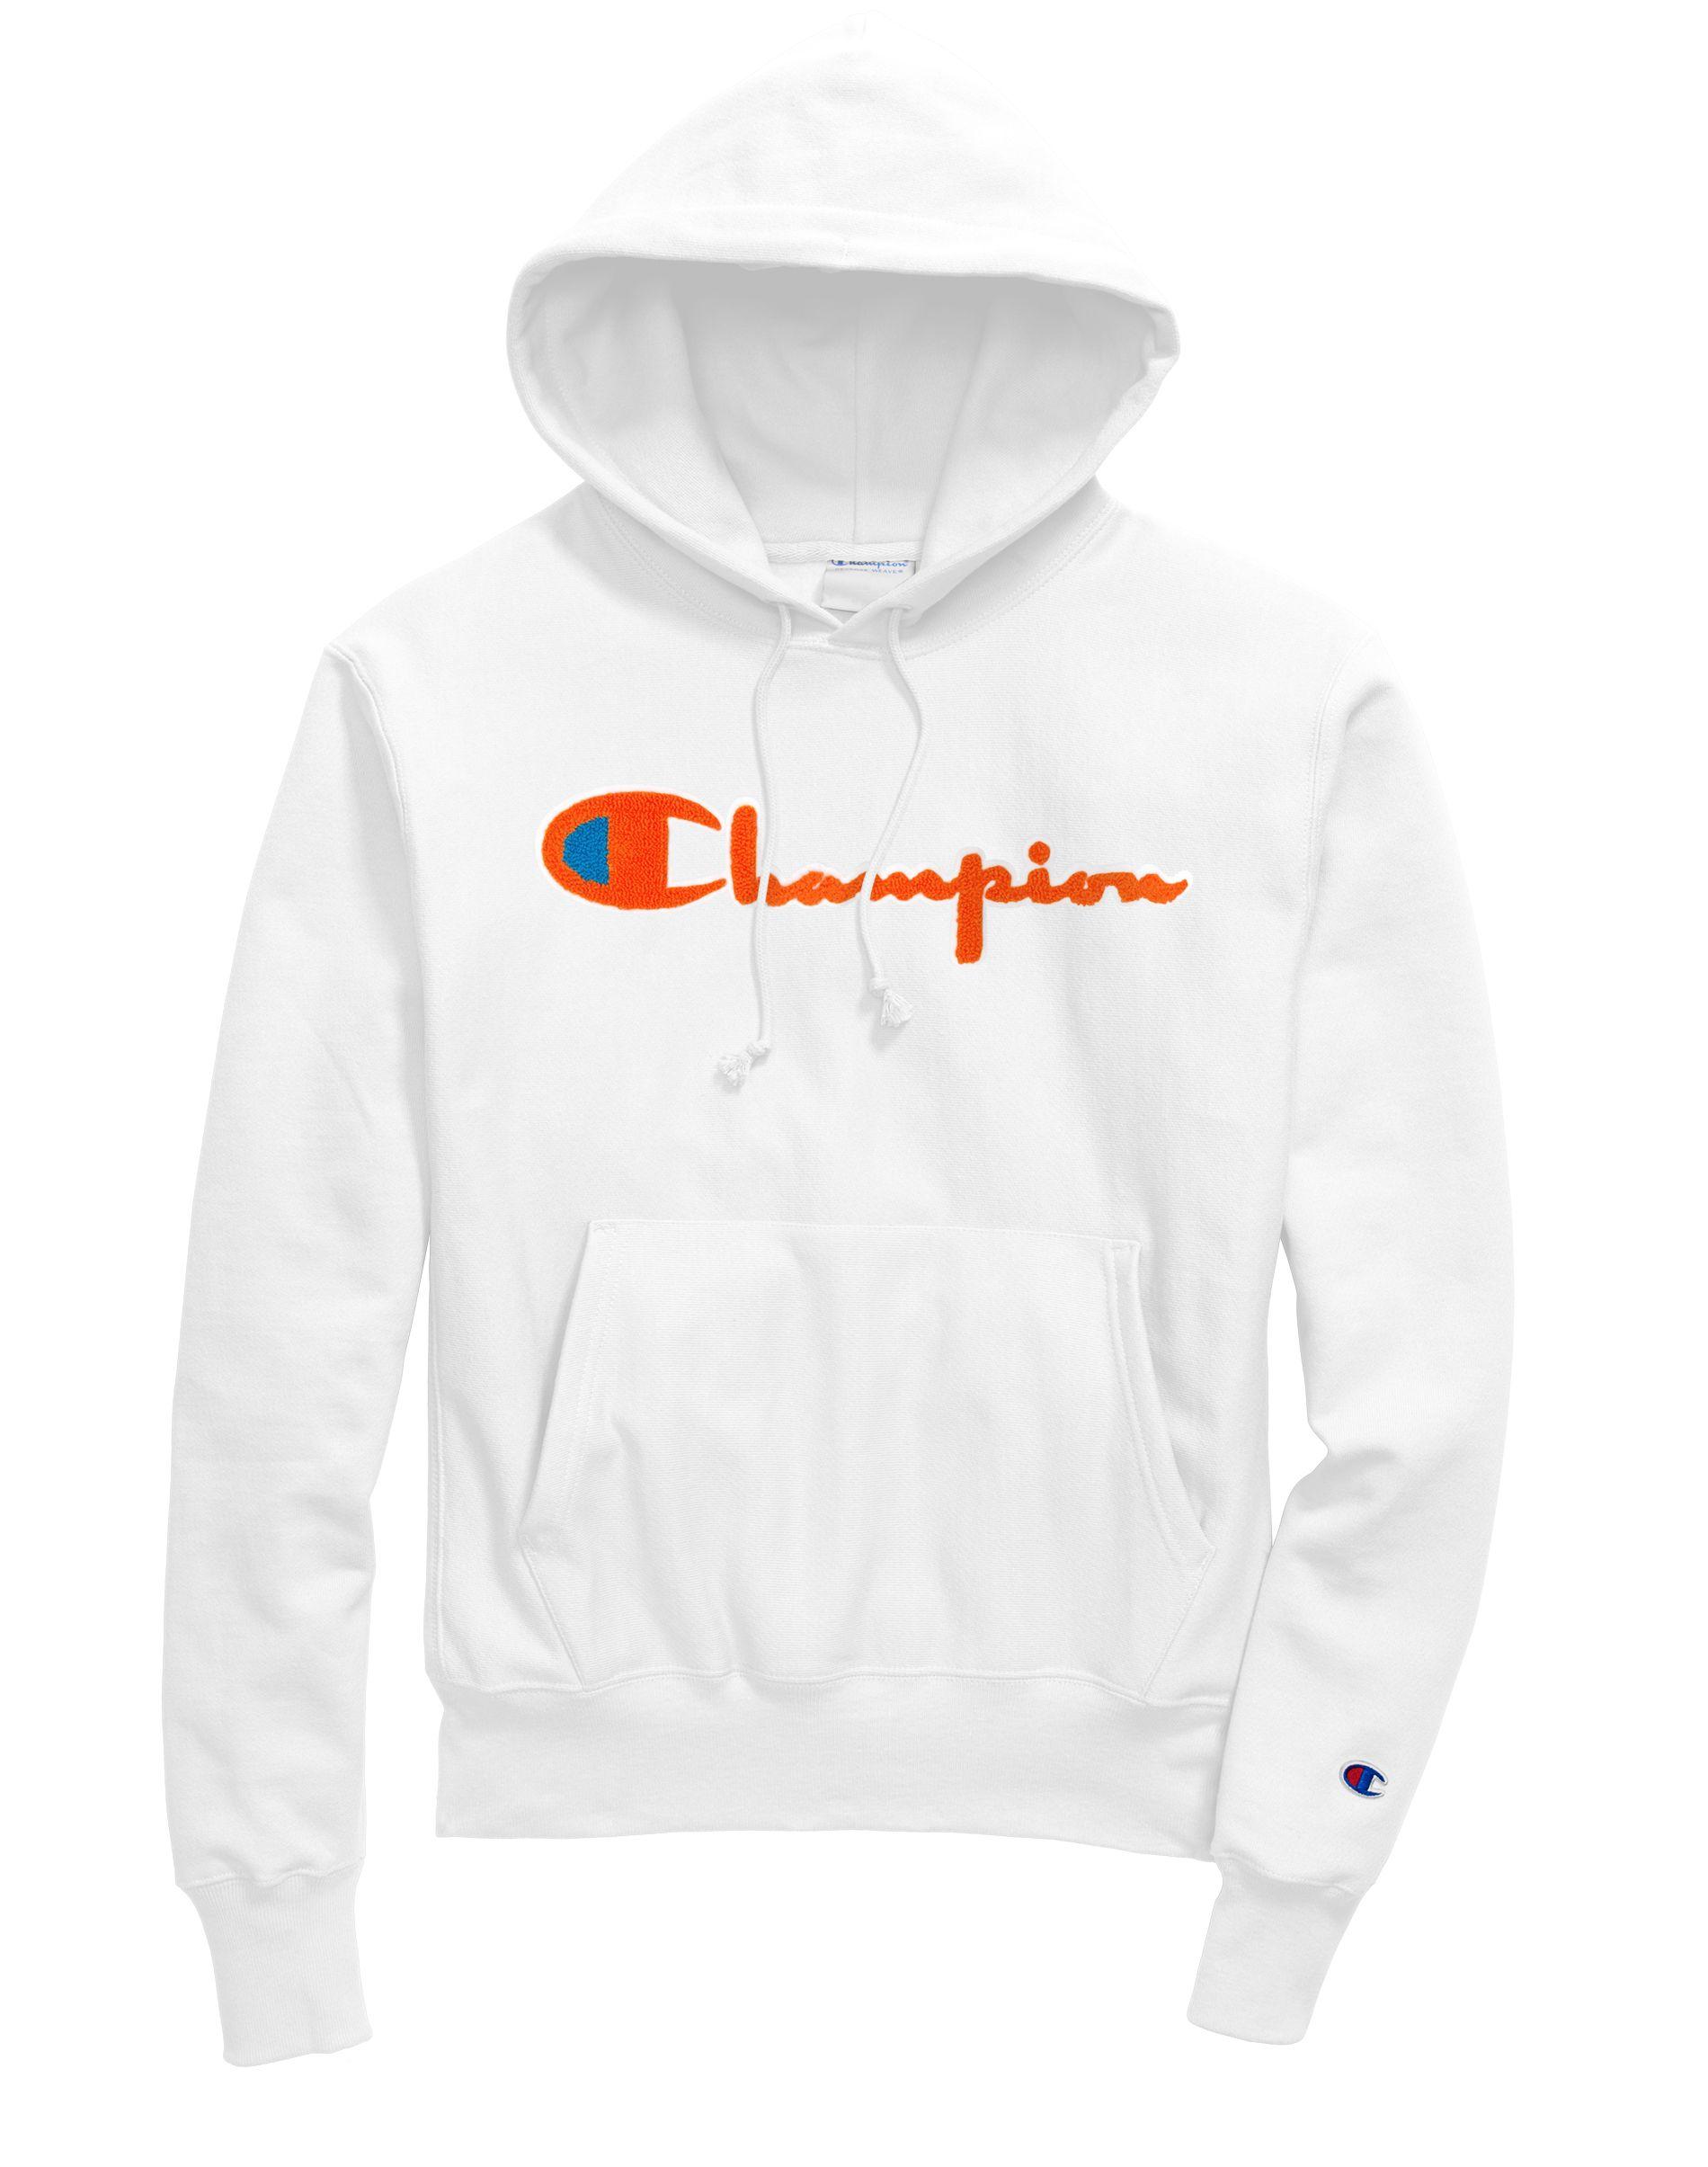 orange and white champion hoodie Off 52% - sirinscrochet.com